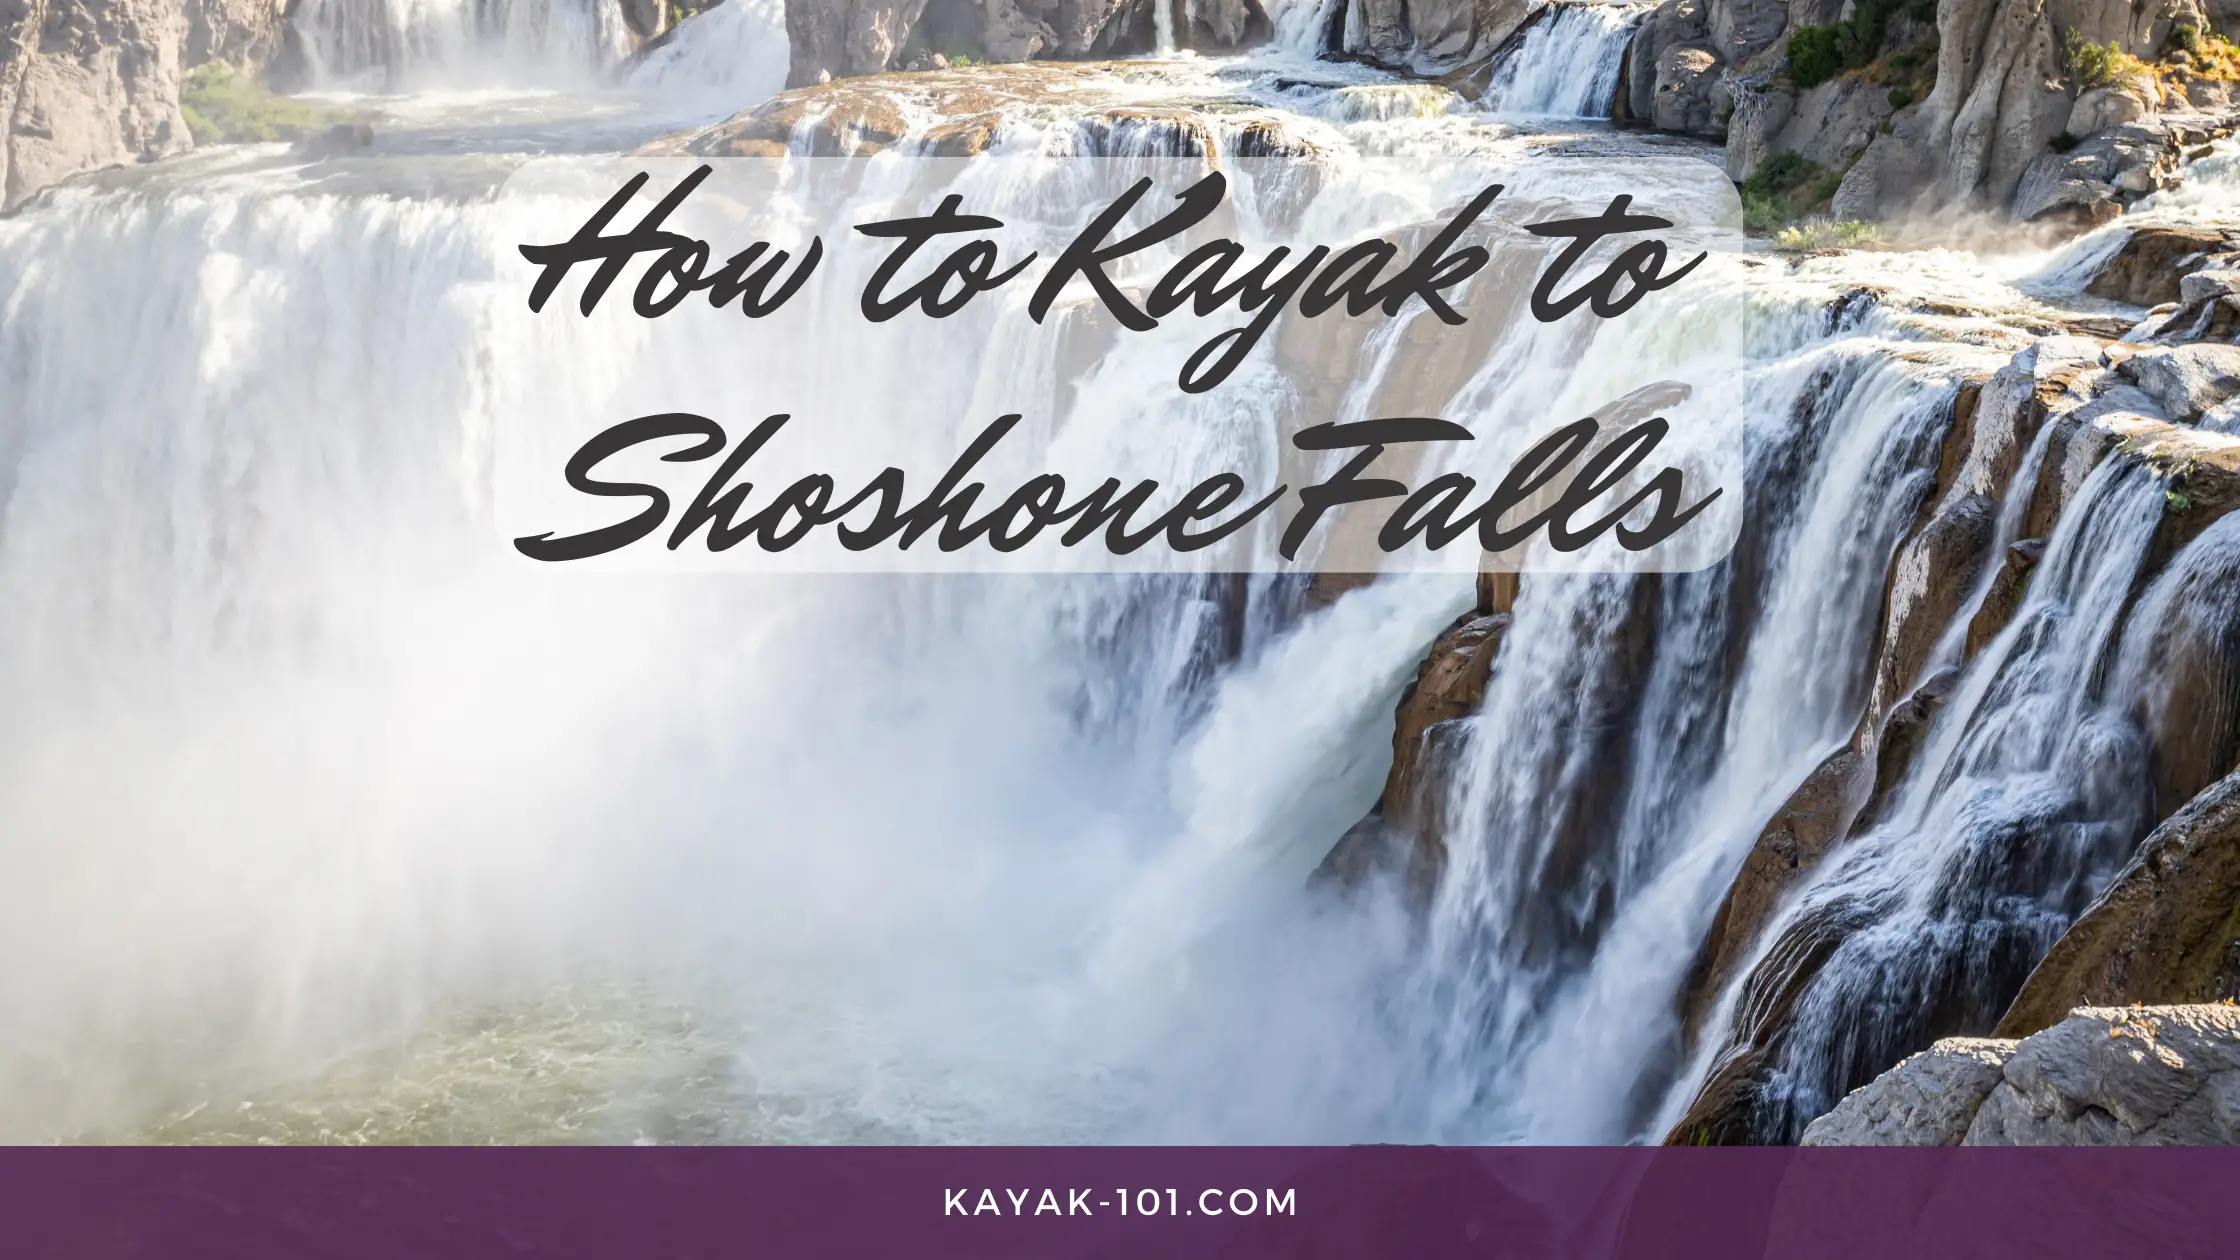 how to kayak to shoshone falls